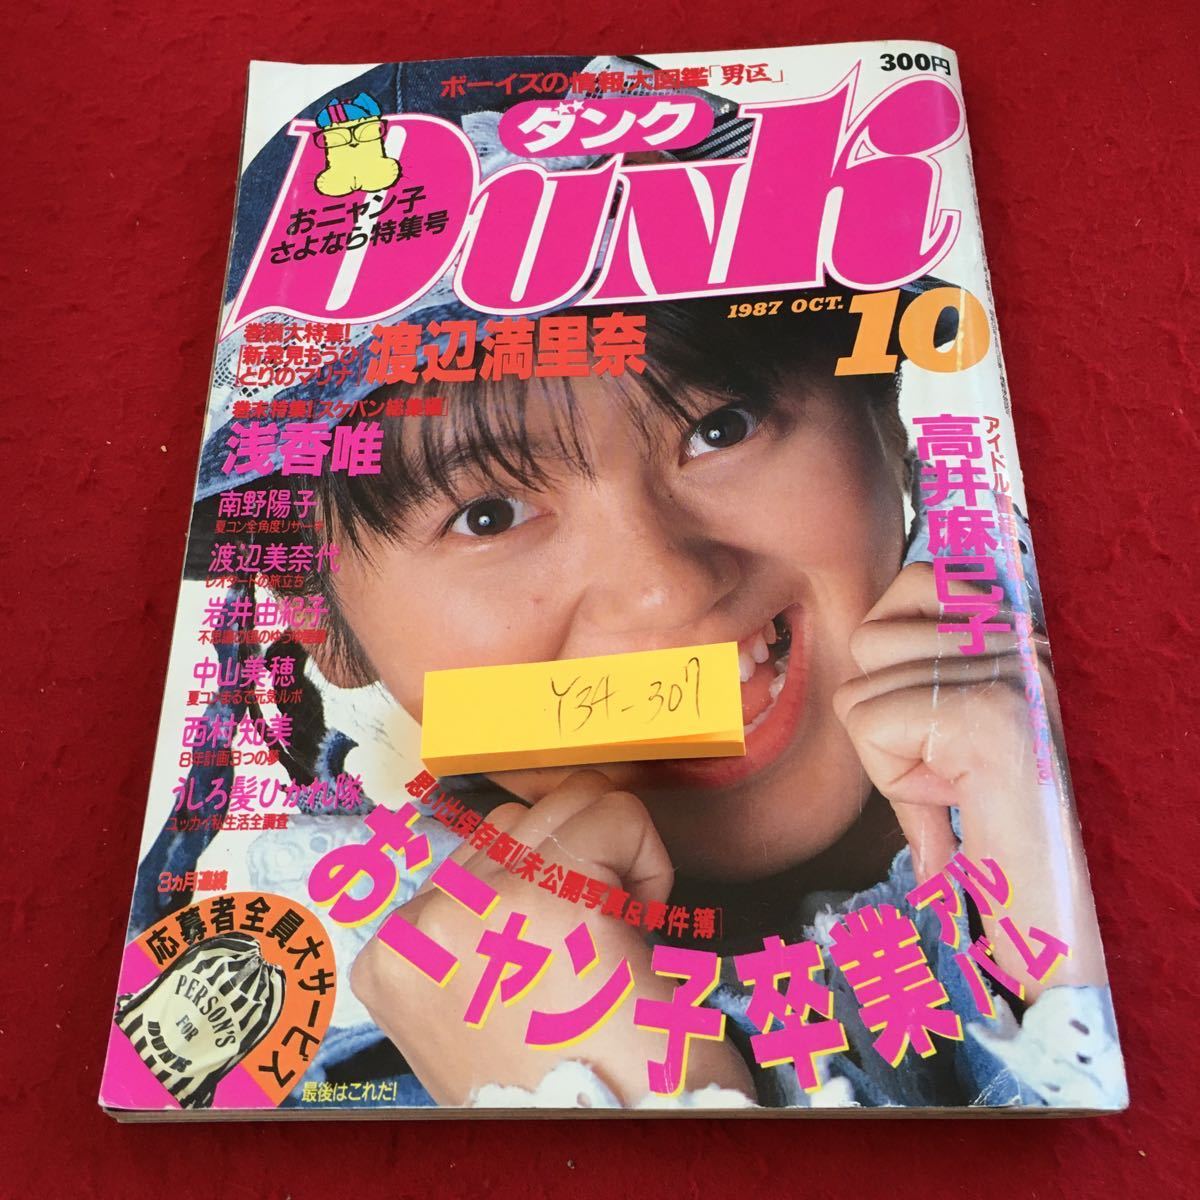 Y35-055 Dunk 1987 год выпуск Watanabe лен .. высота . лен ...nyan.. индустрия альбом Asaka Yui Nakayama Miho ........ и т.п. идол Shueisha 